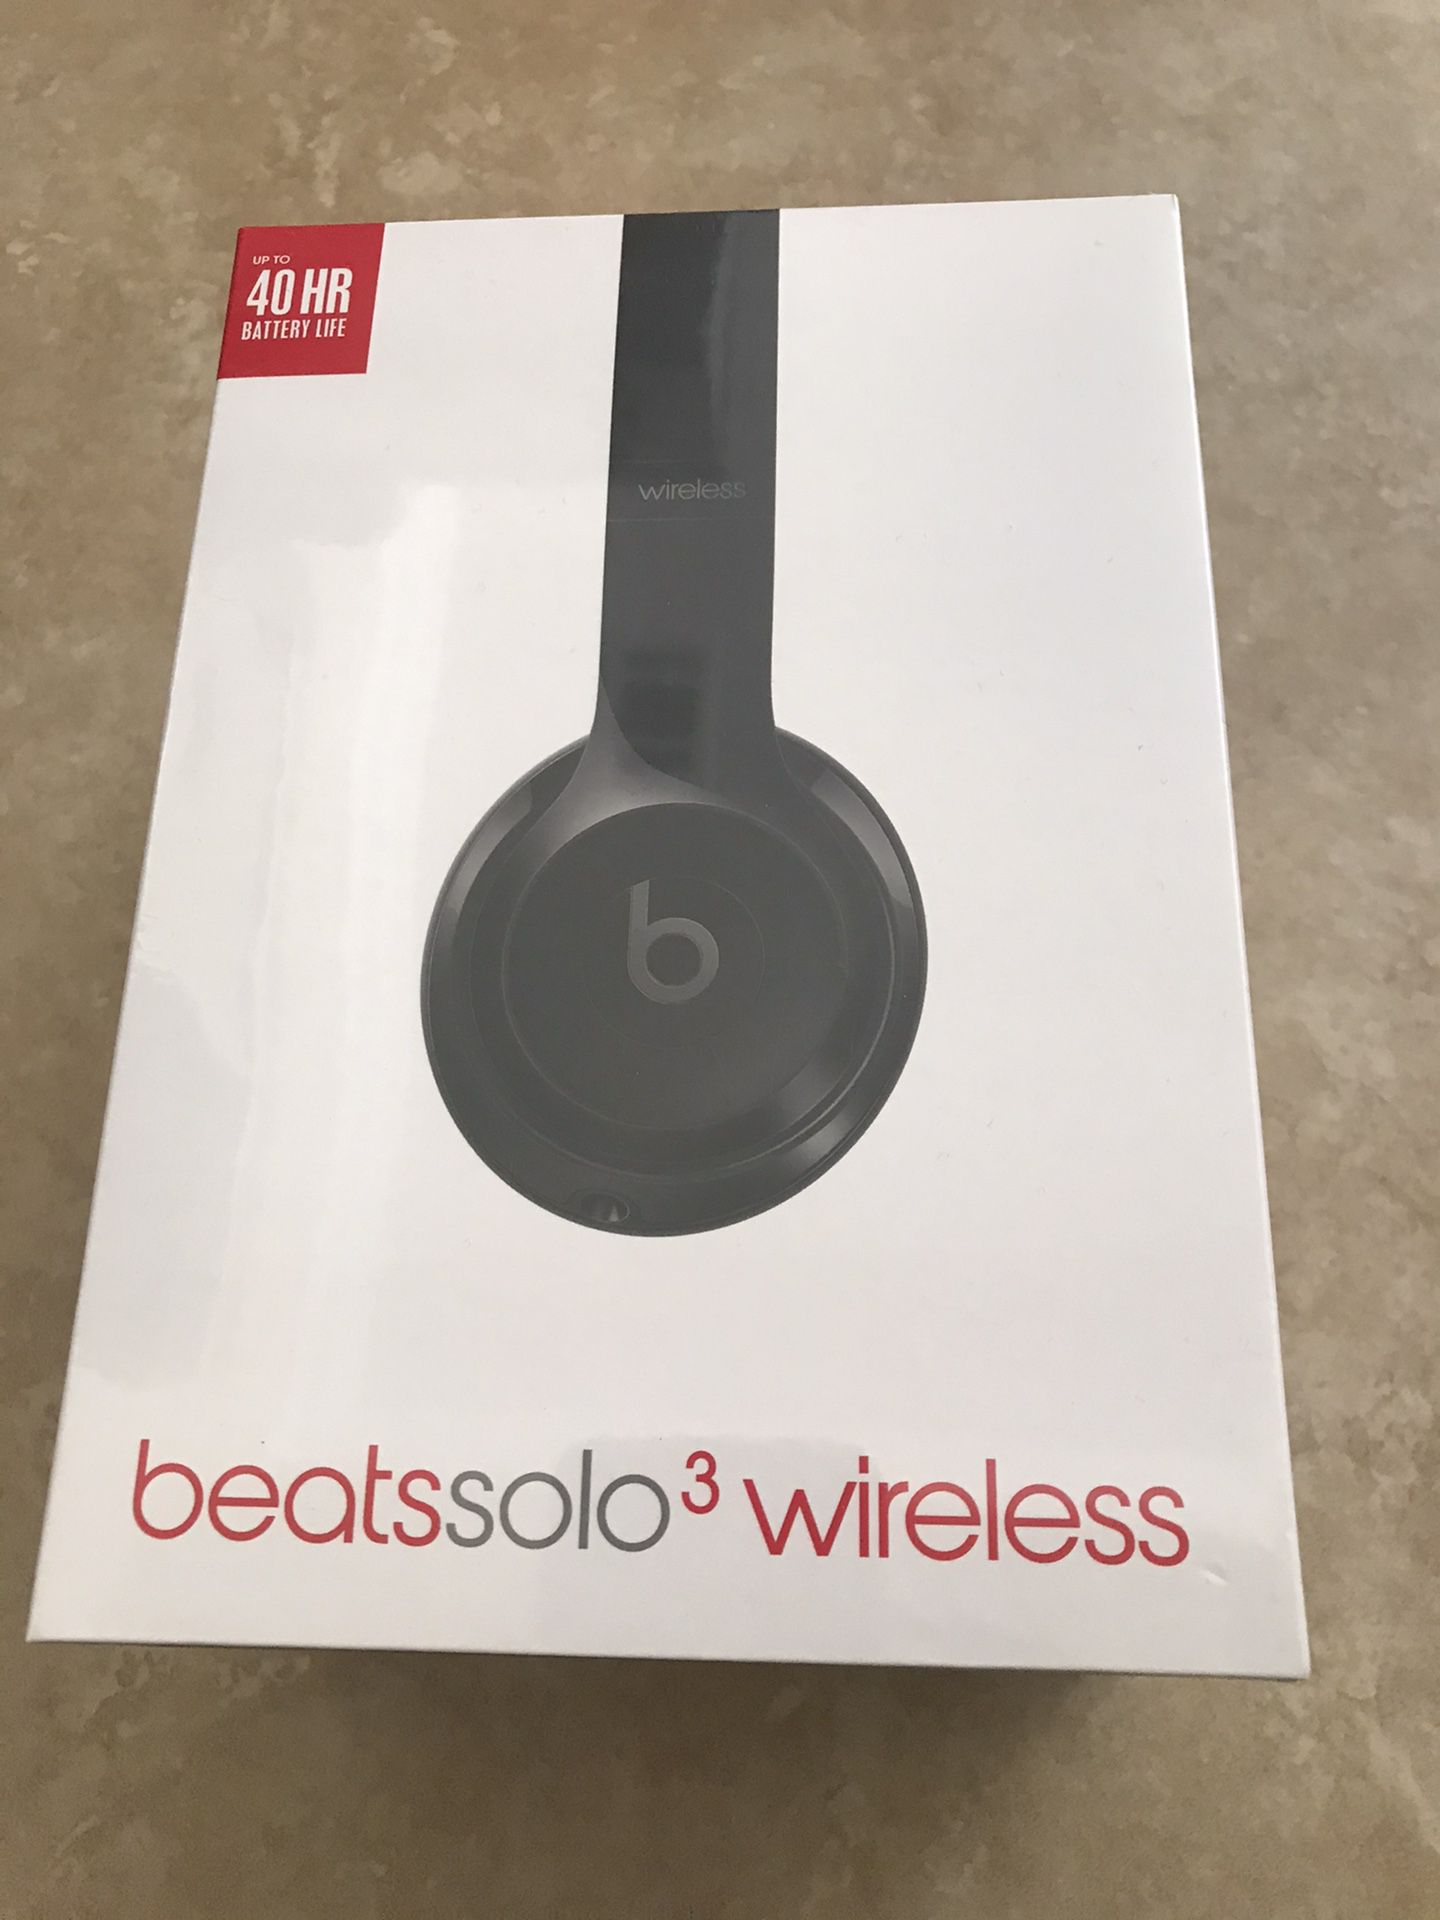 New Beats solo 3 wireless Black sealed